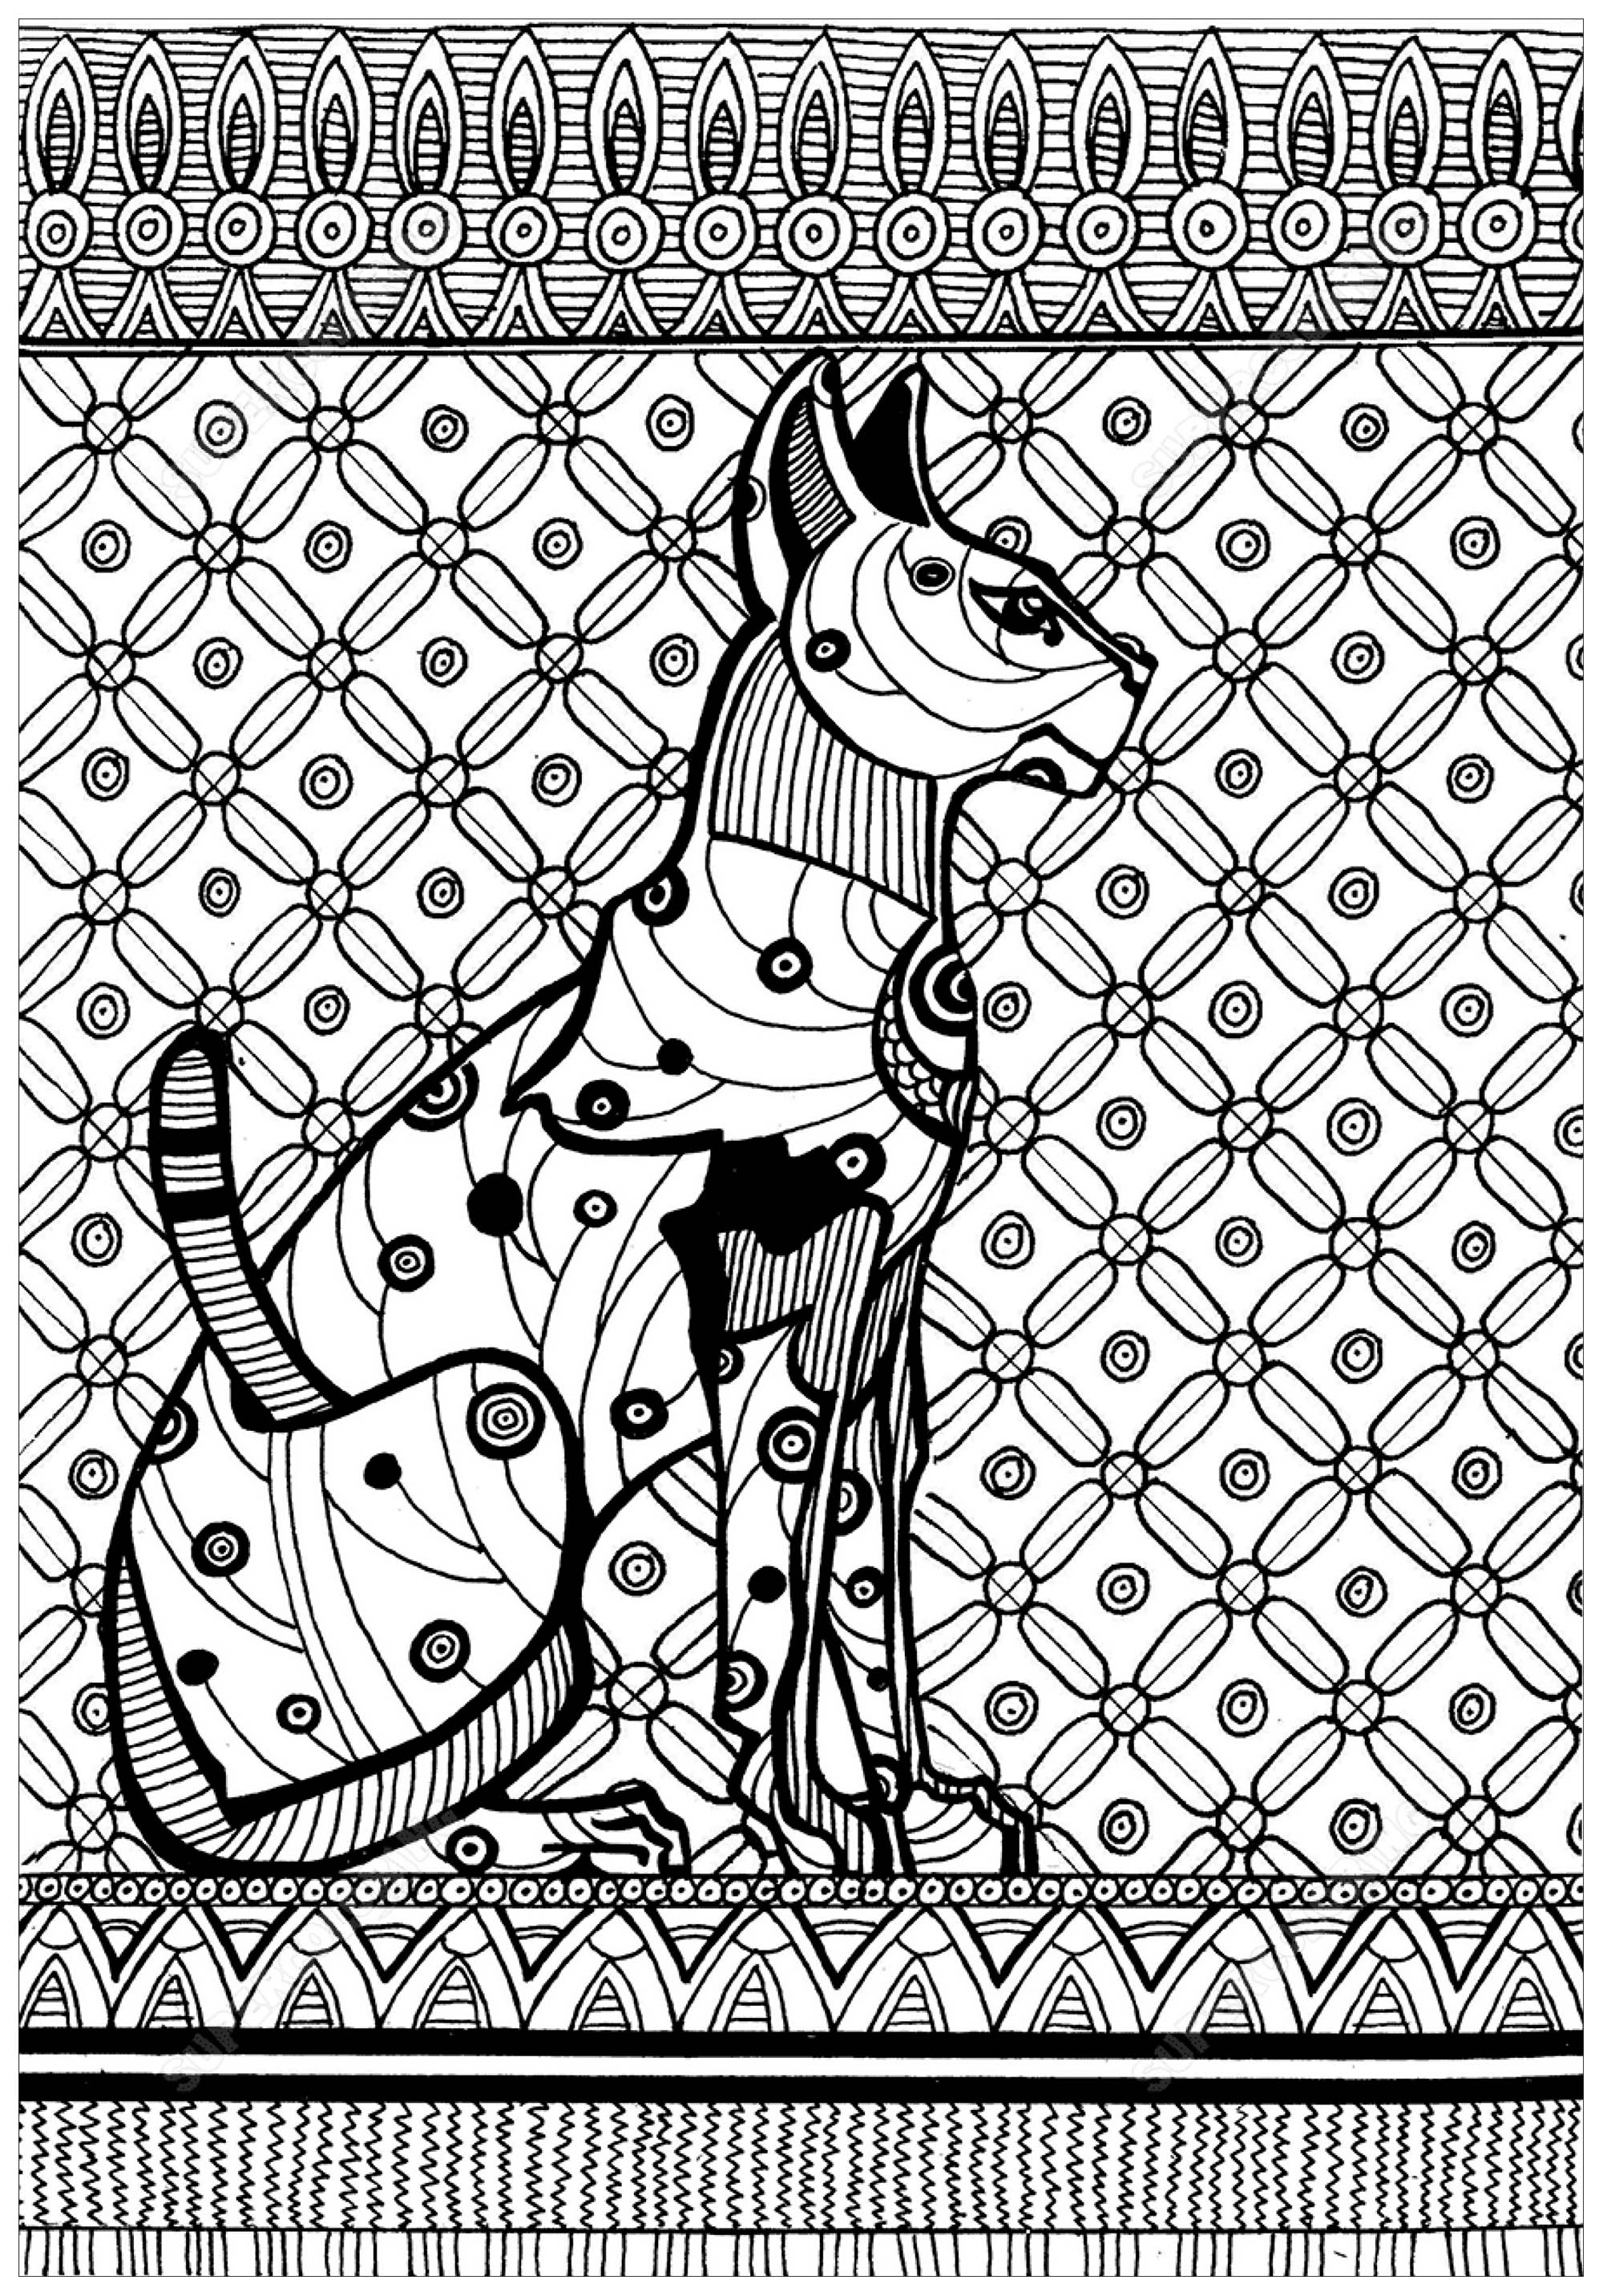 Egyptian cat with drawing inspired by Ancient Egypt art, Artist : Krivosheeva Olga (Ori Akuma)   Source : Supercoloring